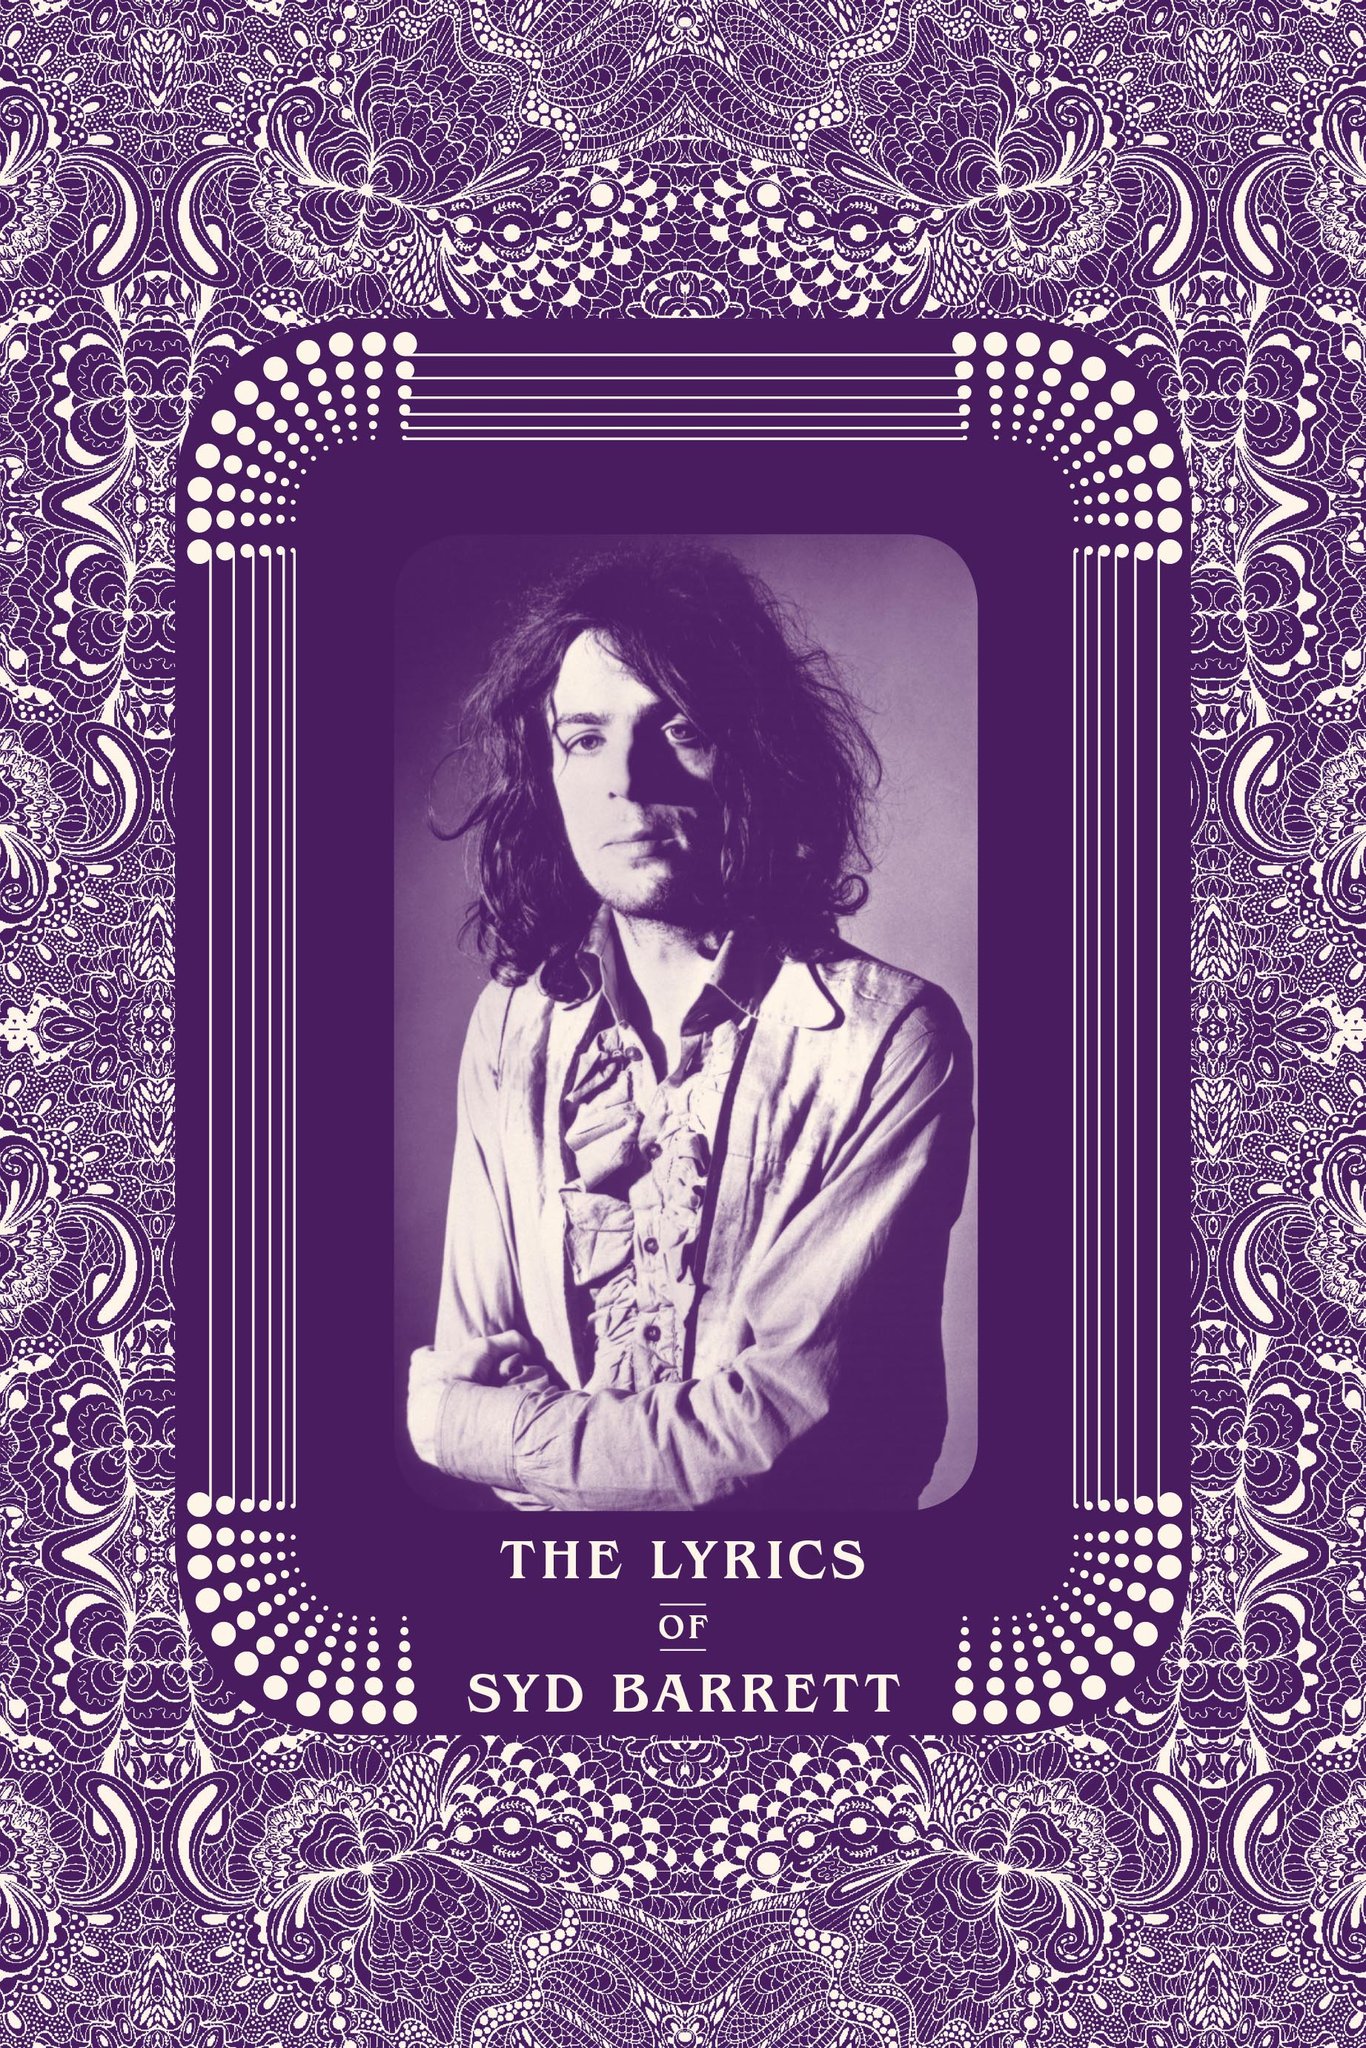 SYD BARRETT AND ROB CHAPMAN – The Lyrics of Syd Barrett